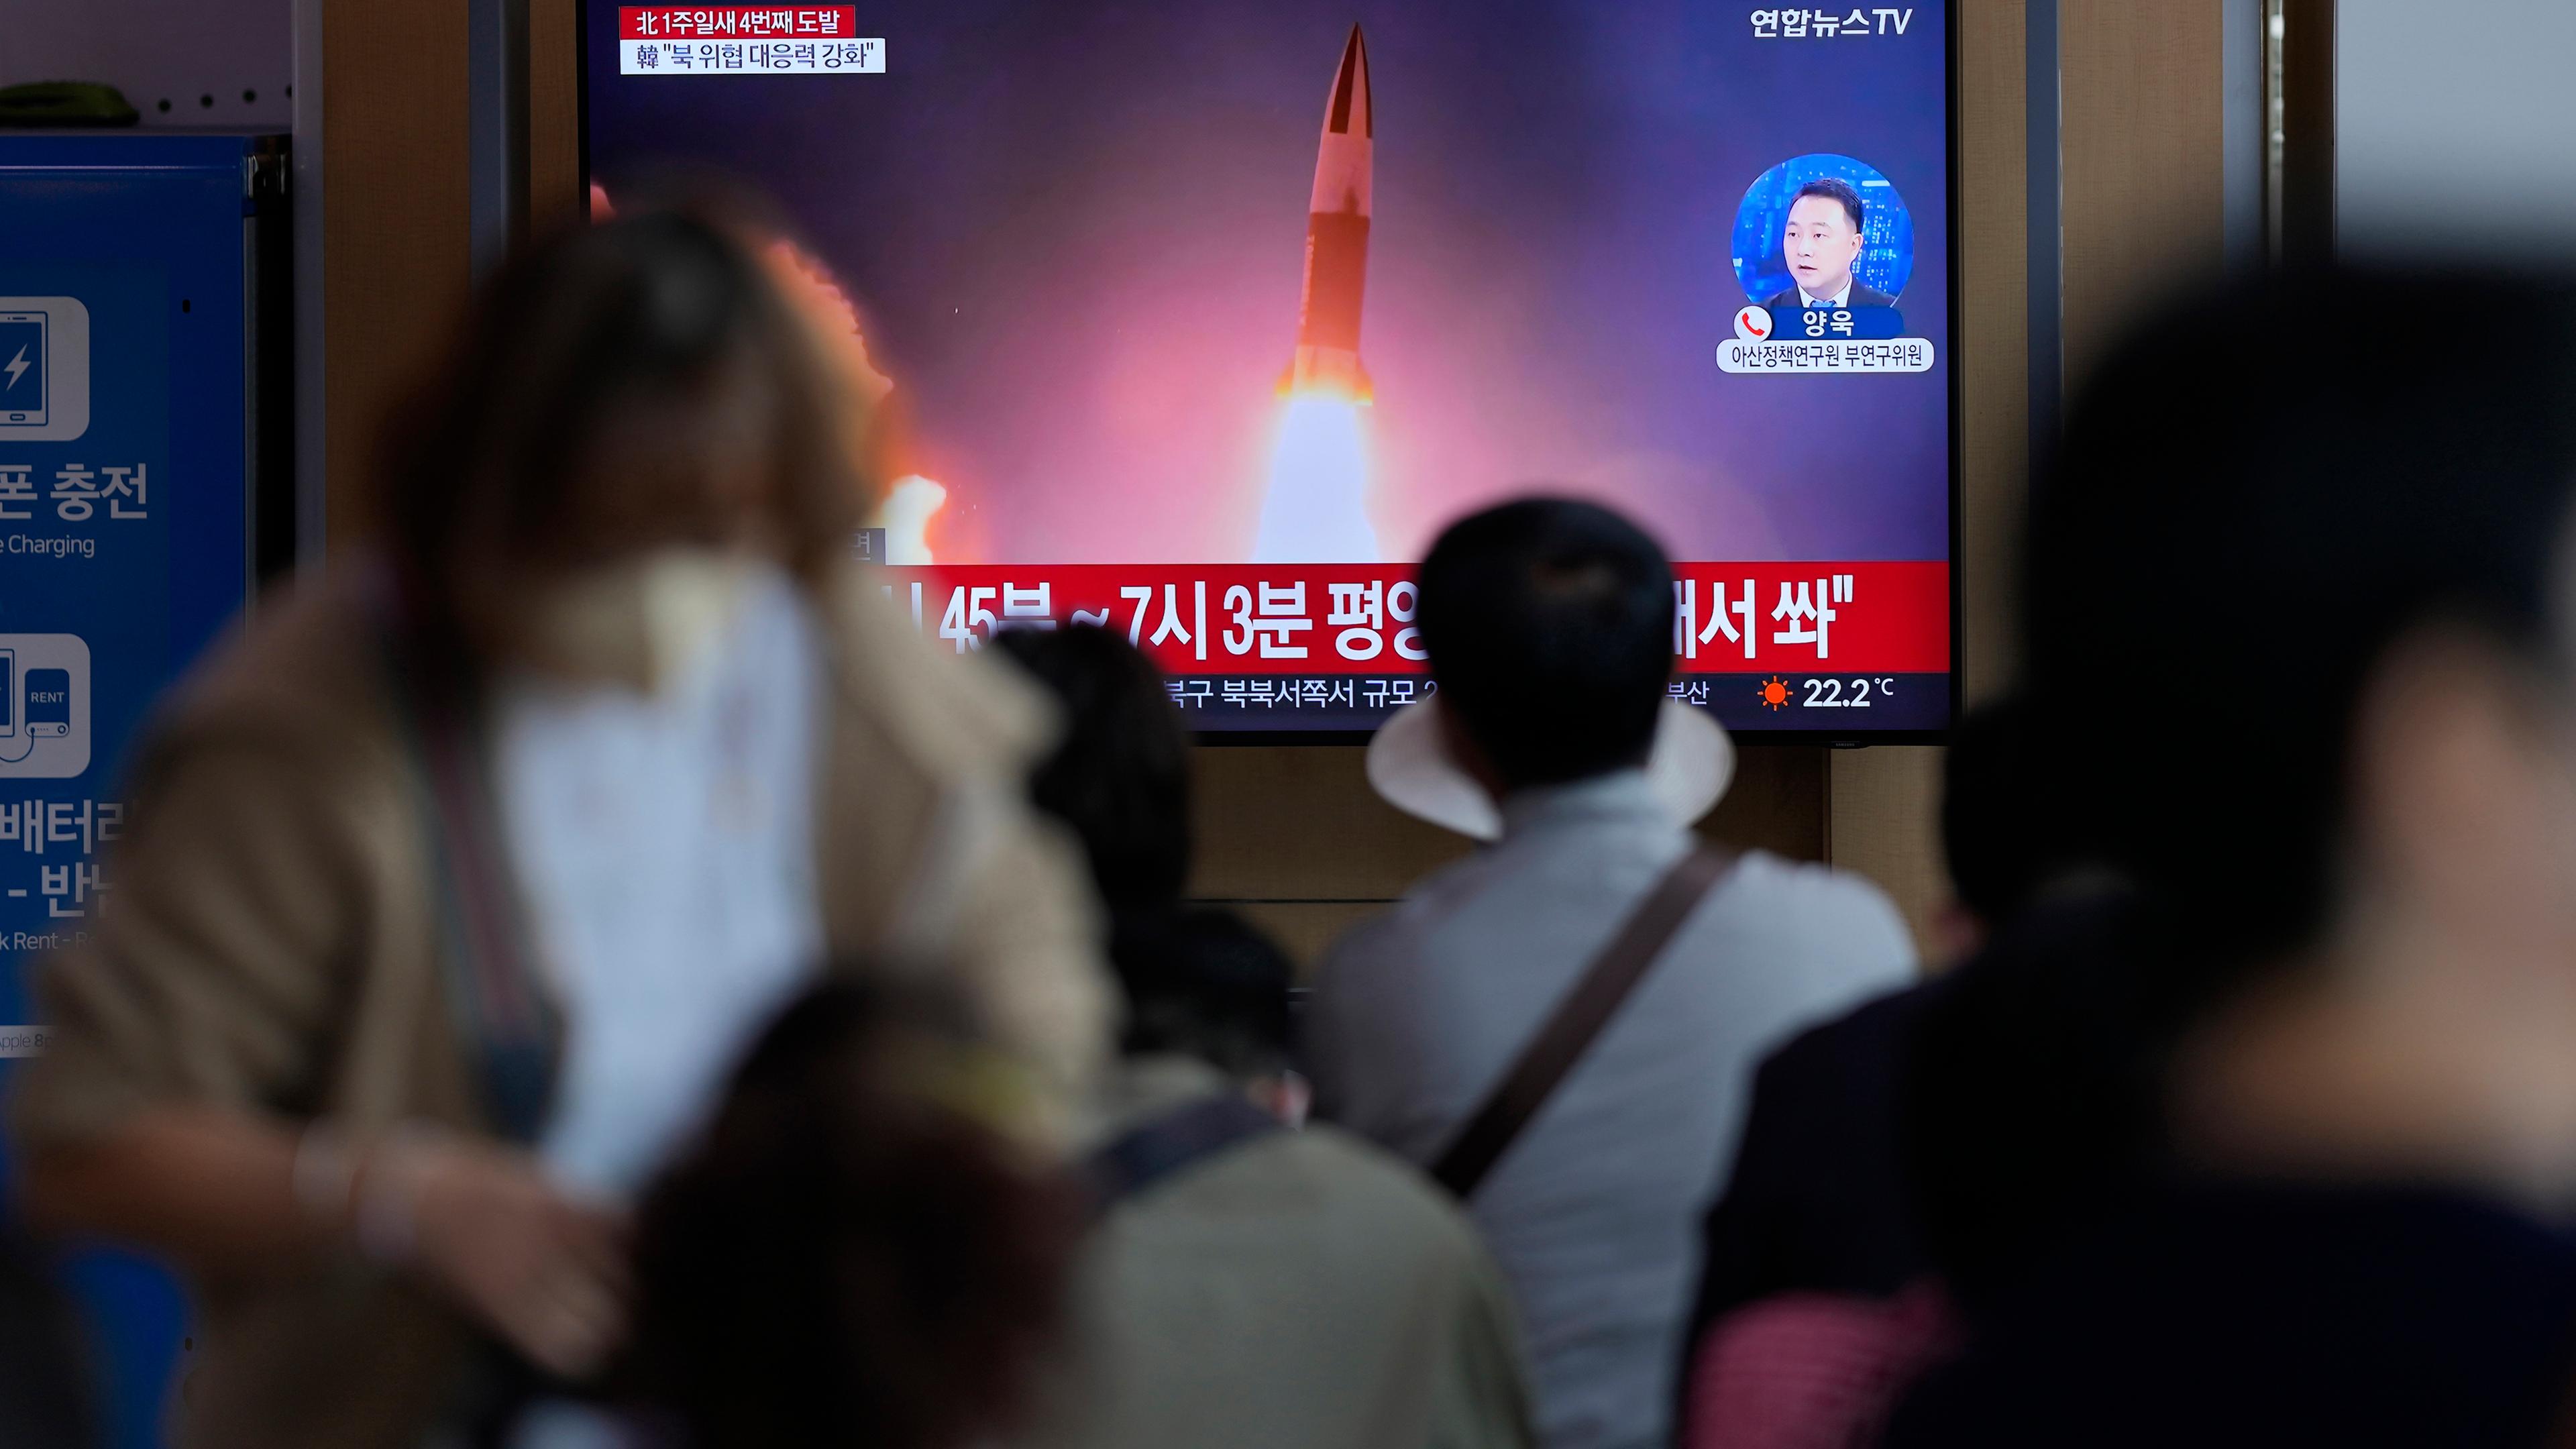 TV-Bericht in Südkorea über Raketentestets in Nordkorea